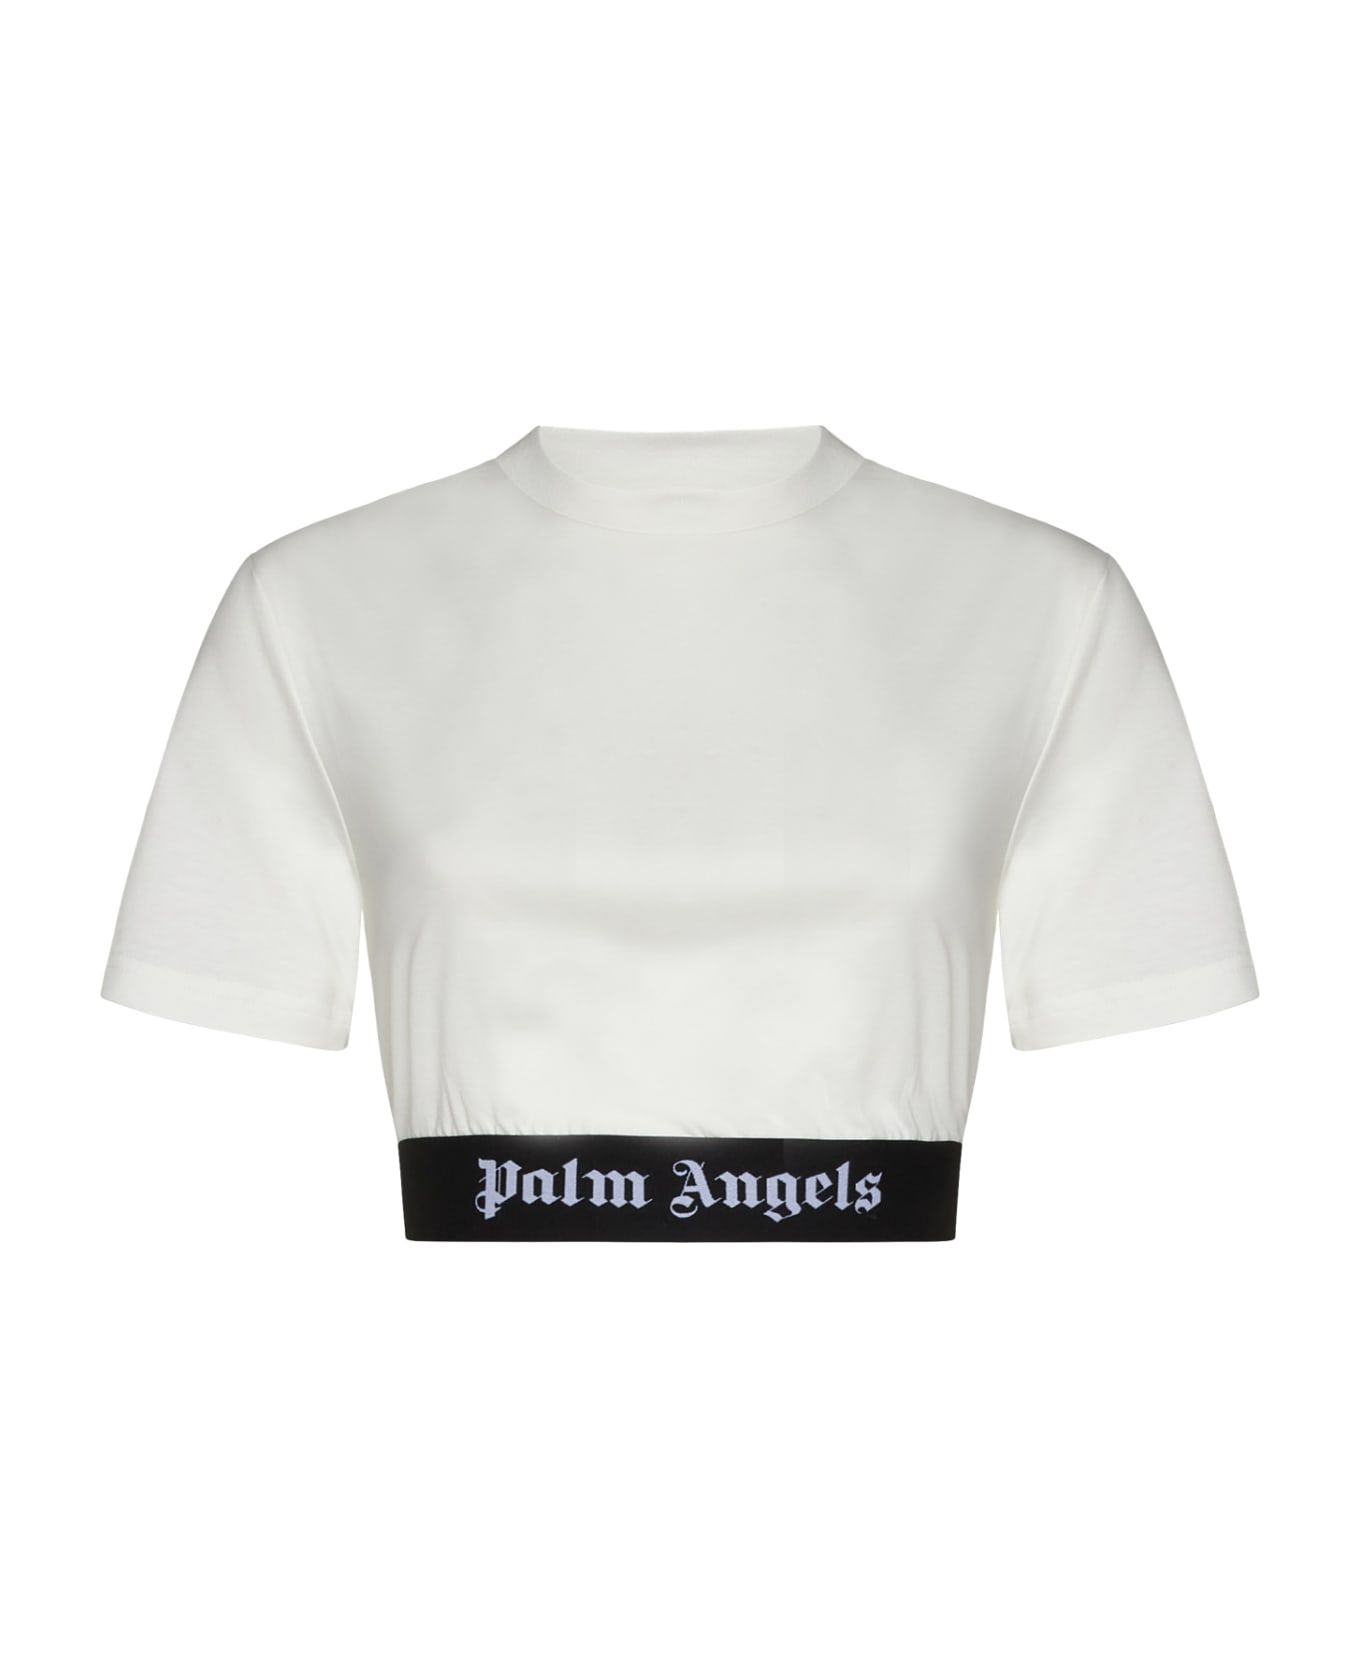 Palm Angels Cotton Crop Top - White Tシャツ